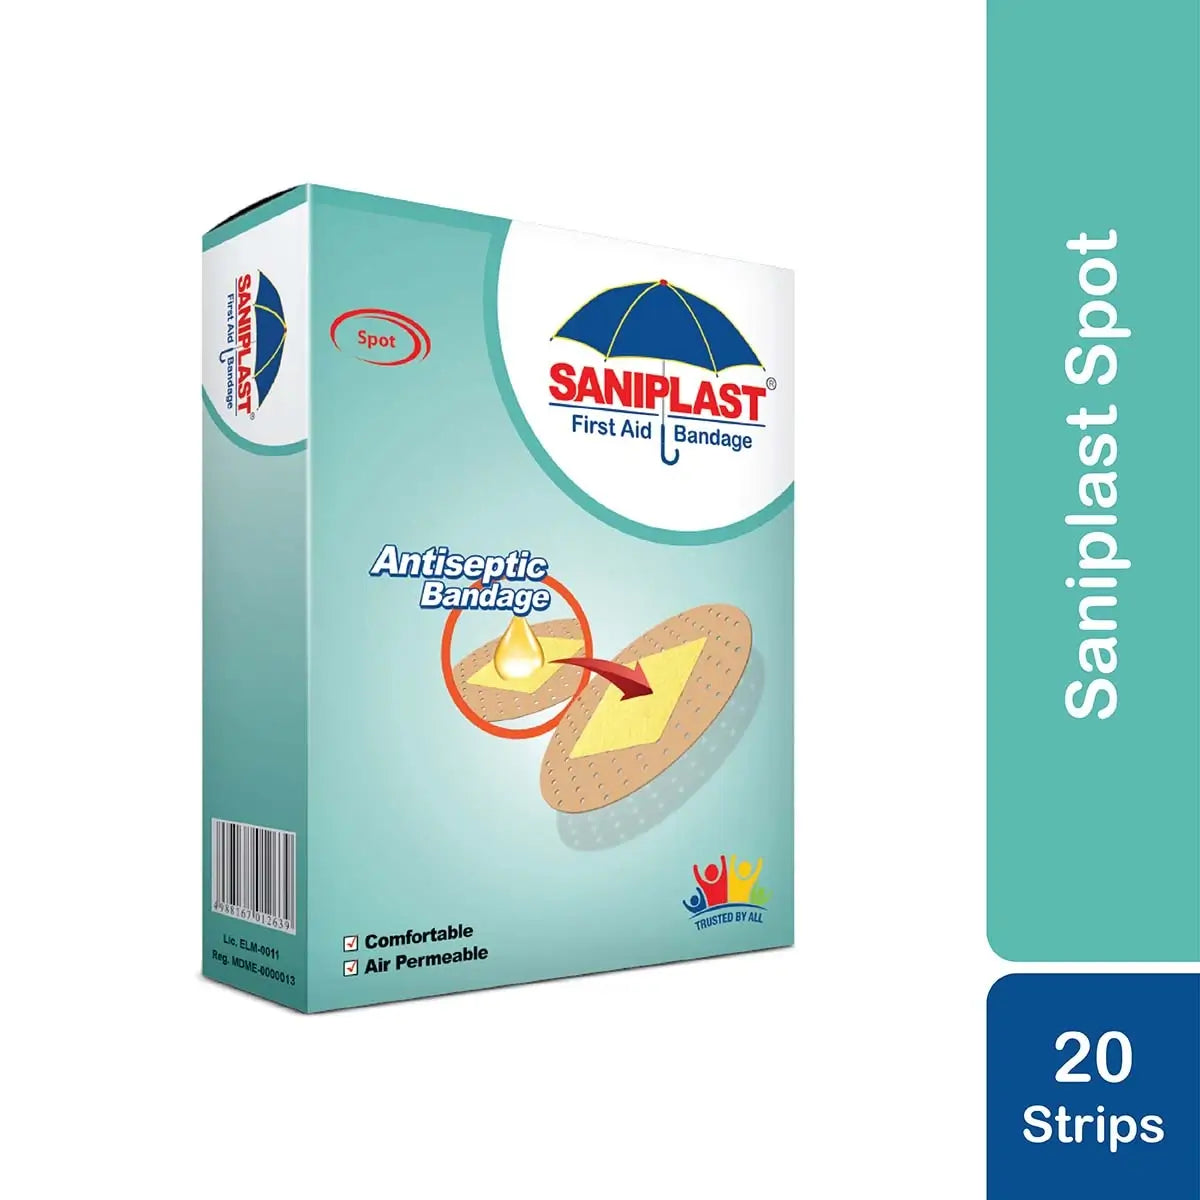 Saniplast Spot Bandages (20 Strips)